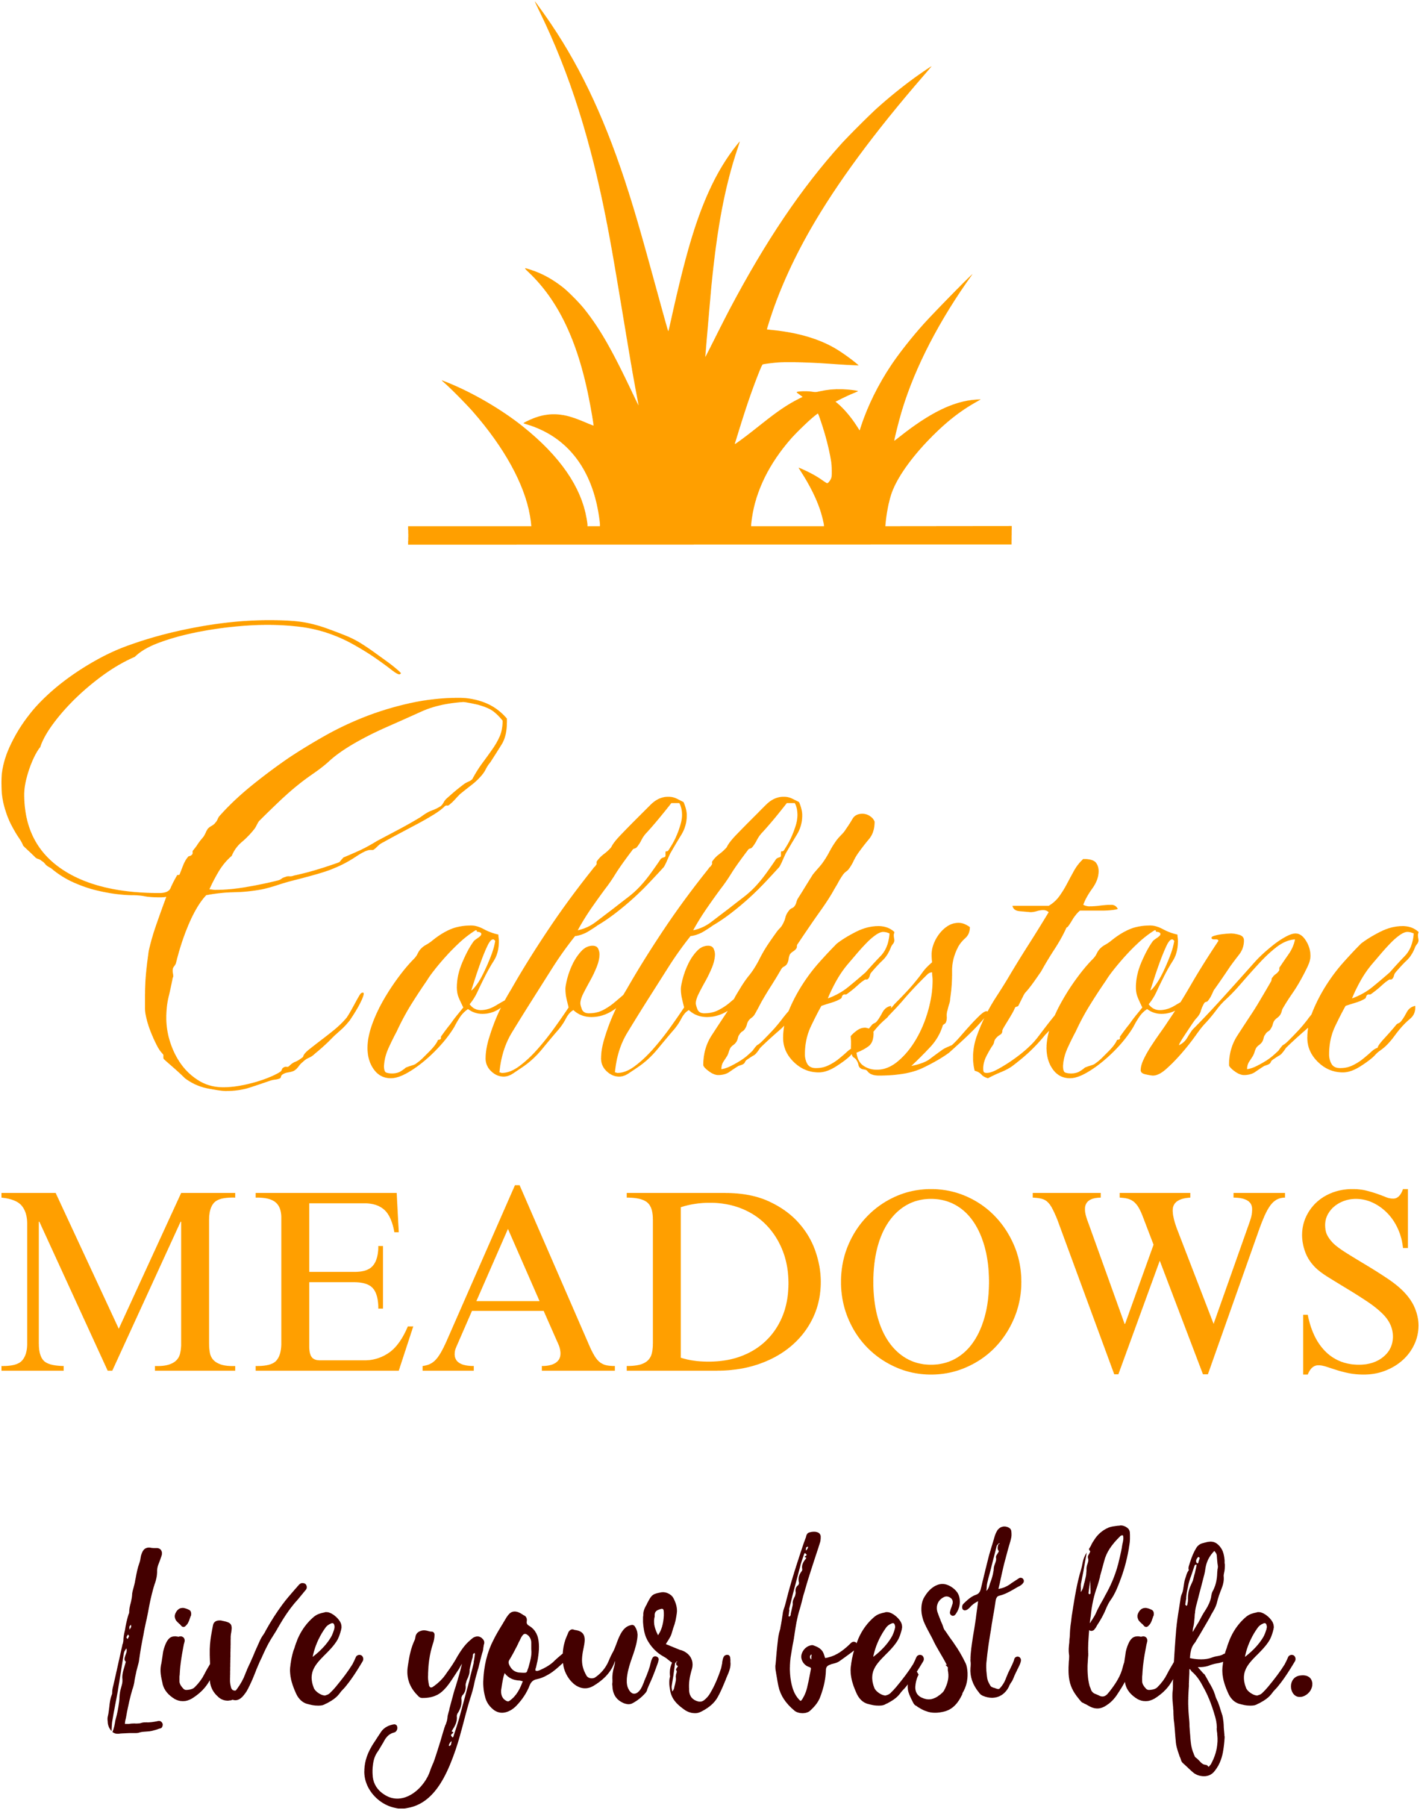 Cobblestone Meadows Logo